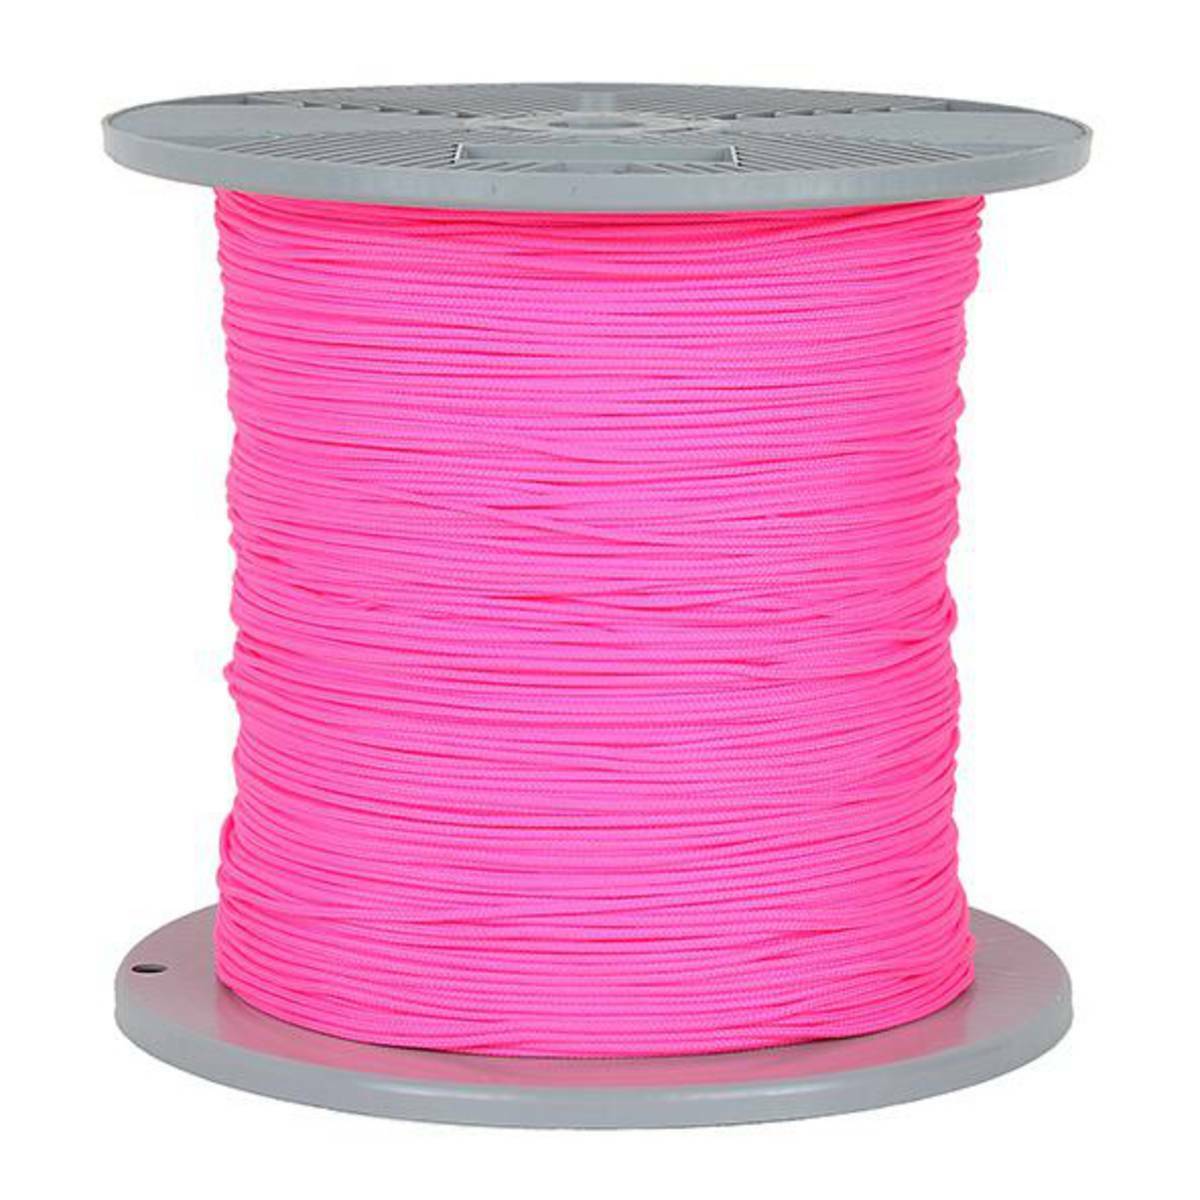 Tir-fil cablé rose fluo résistance 140 daN 1000m Polyamide PA/Polyester